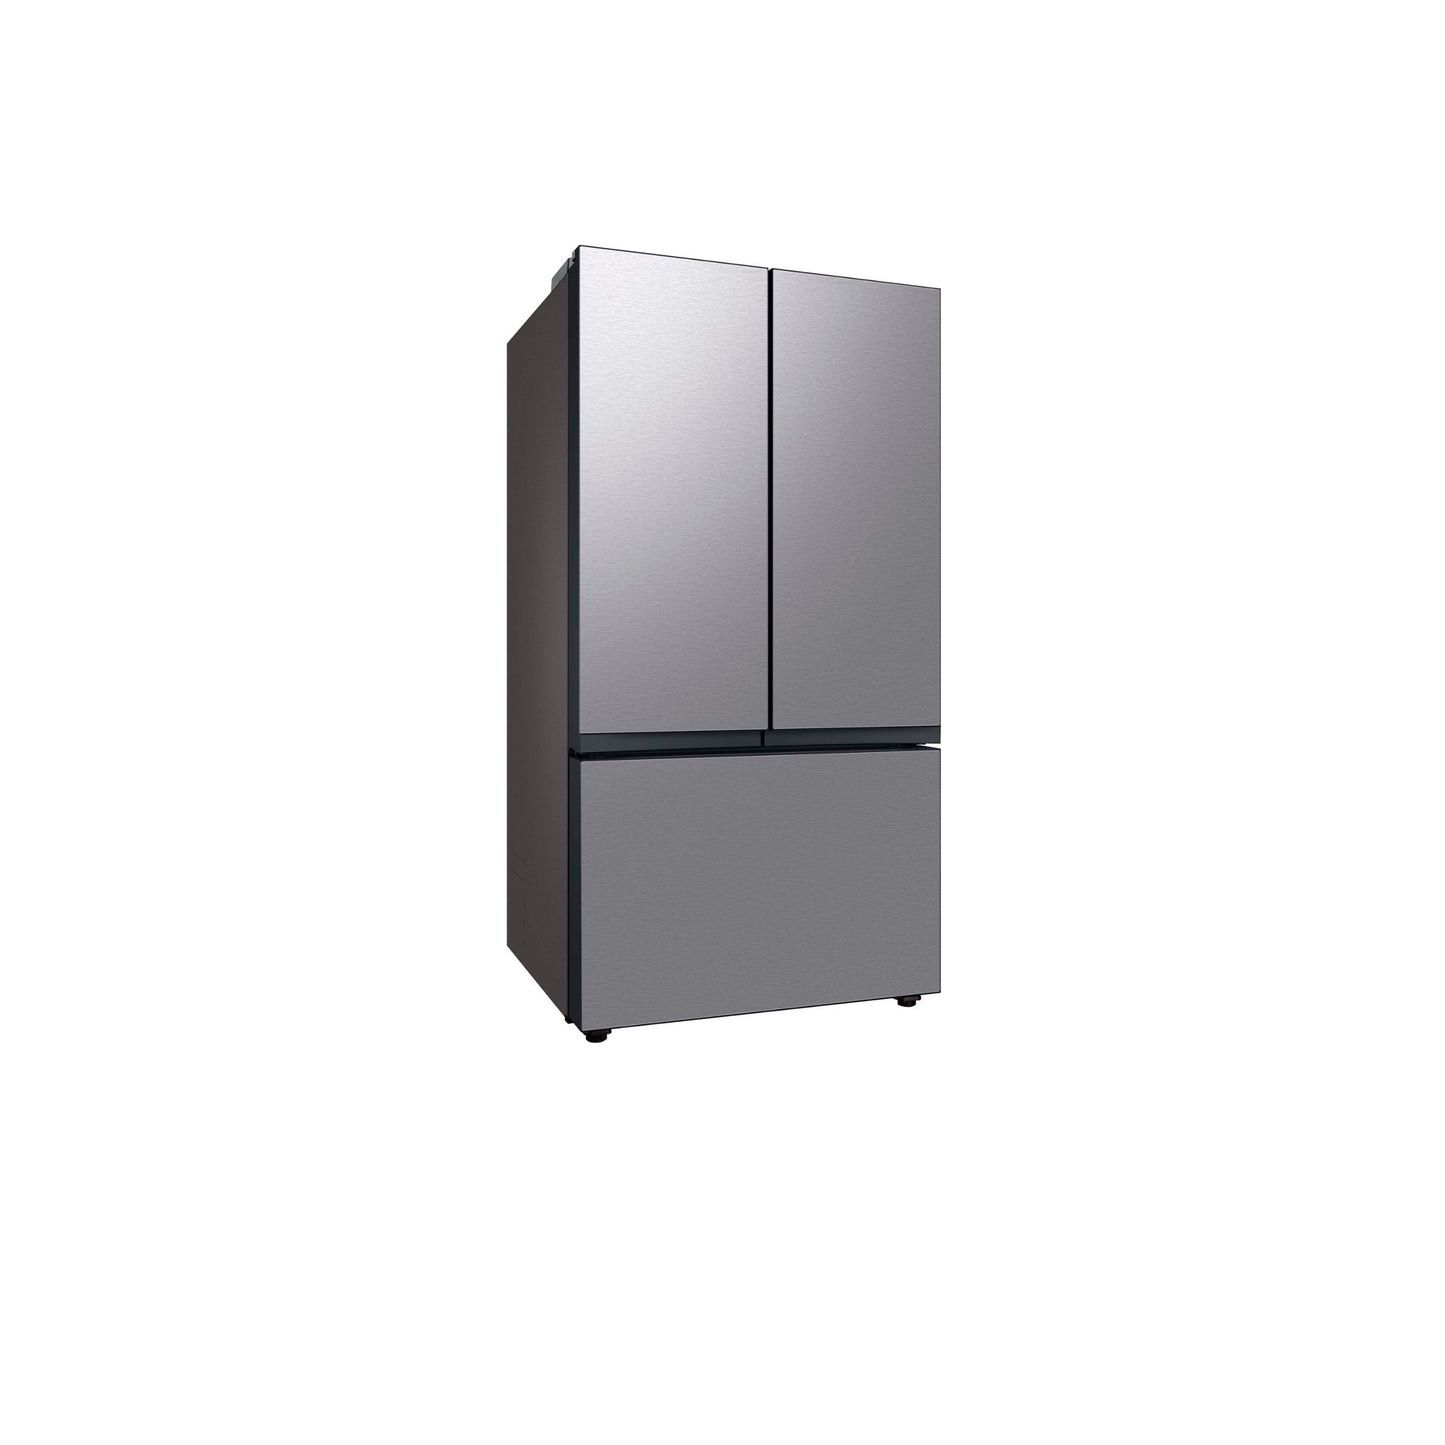 Bespoke 3-Door French Door Refrigerator (24 cu. ft.) with AutoFill Water Pitcher in Stainless Steel.